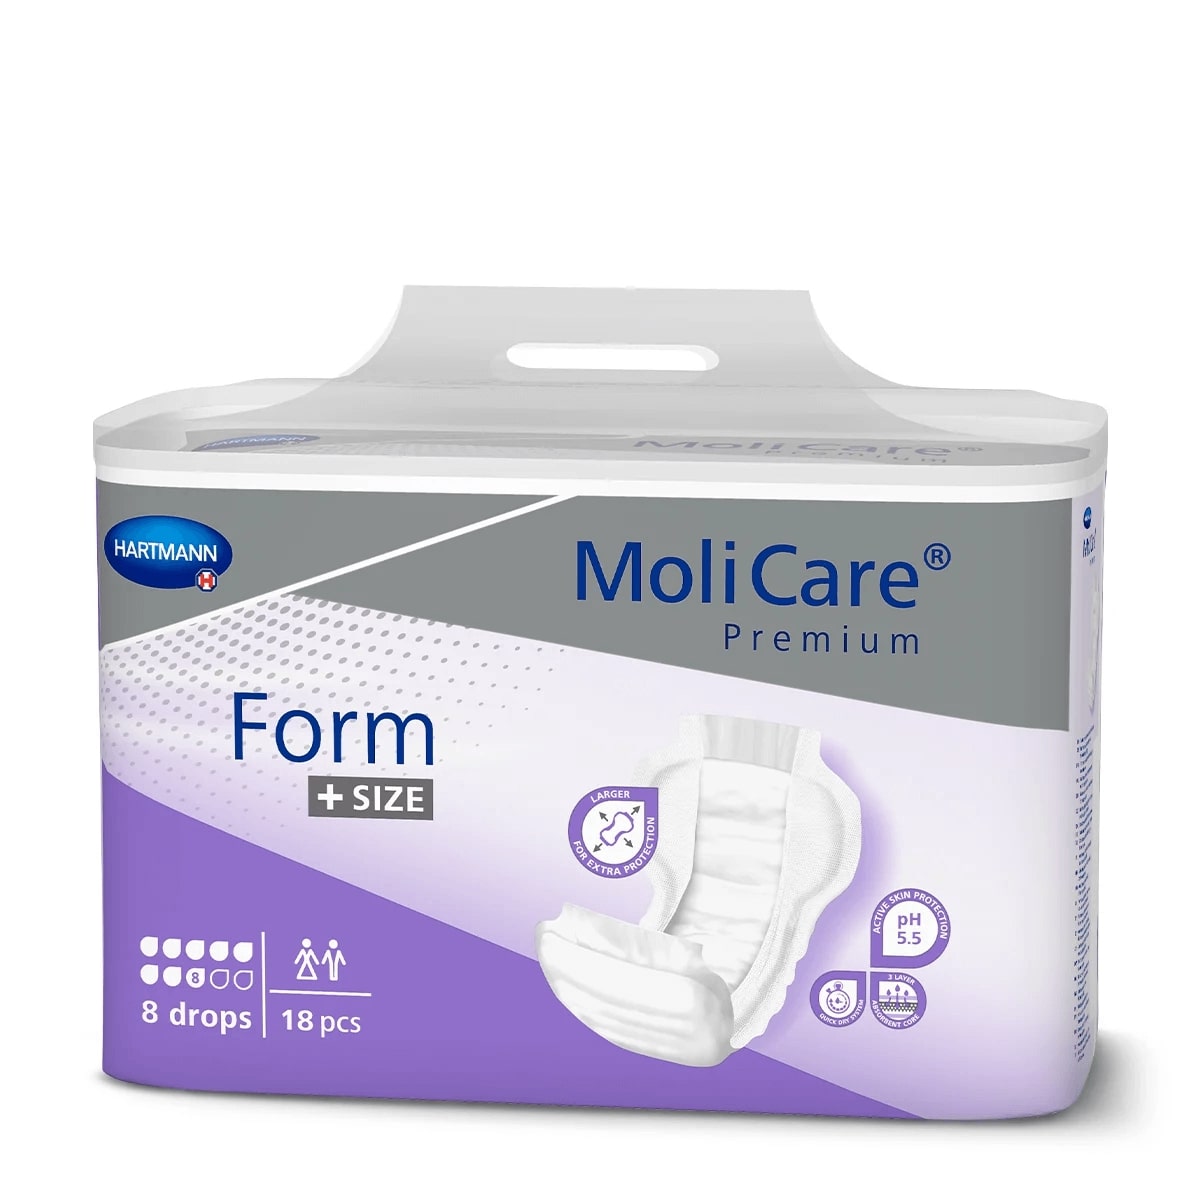 MoliCare® Premium Form +SIZE 8 Tropfen